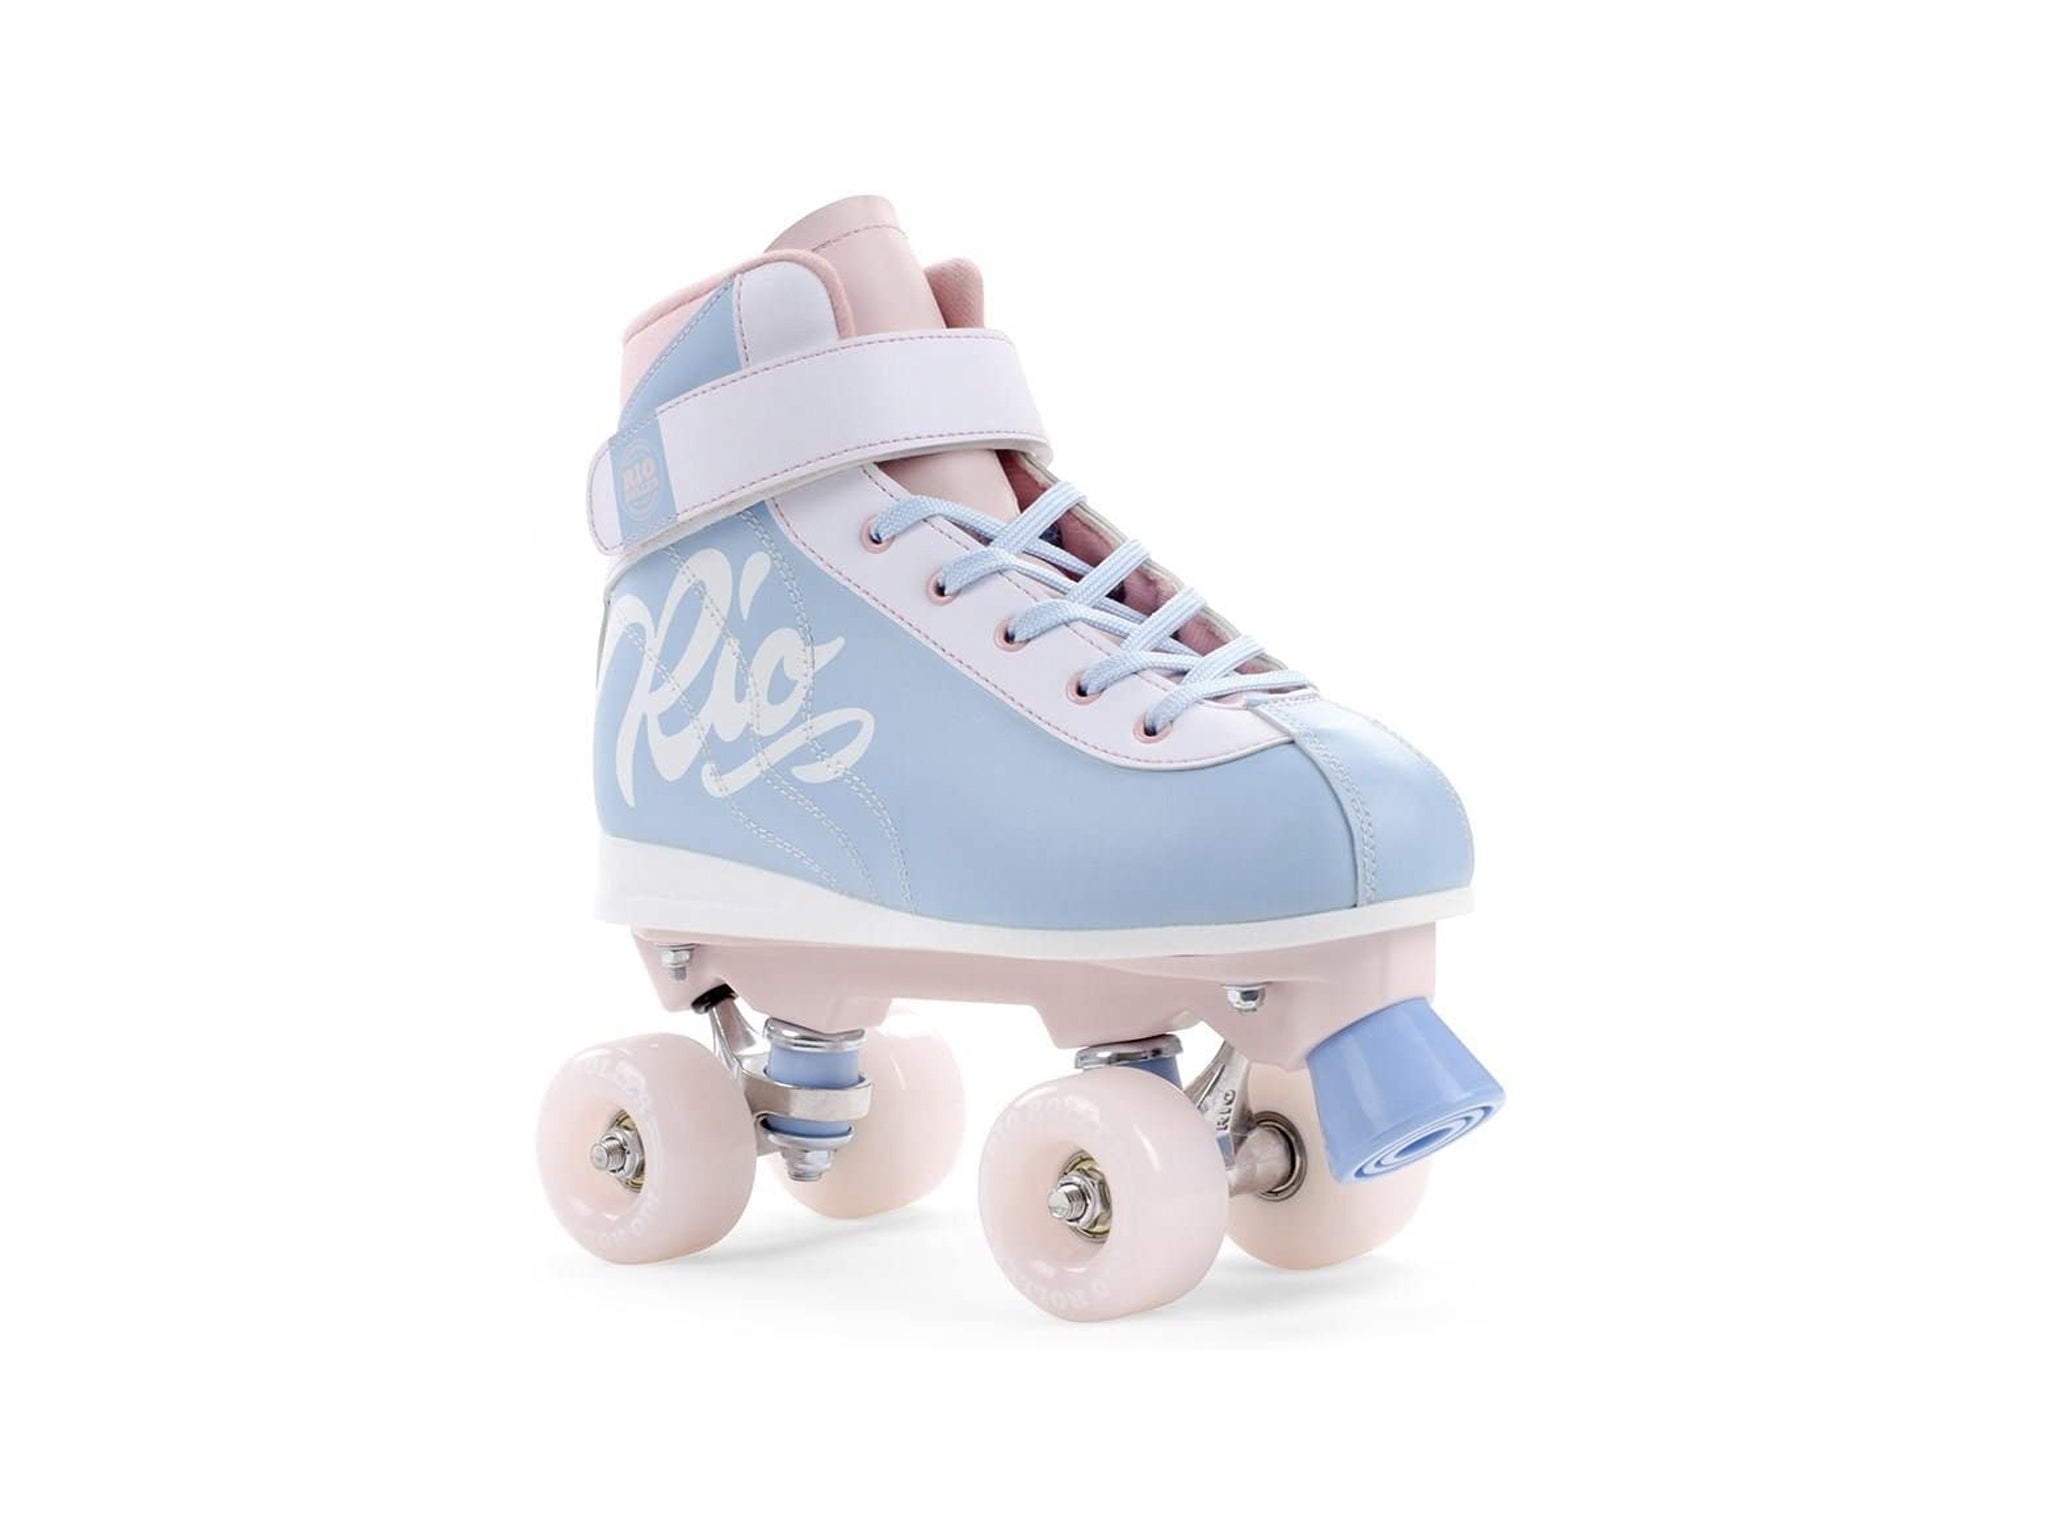 ONEKE Roller Skates Kids Boys Girls Adjustable Rollerblades Multi-Function Convertible Skating Shoes Beginners Advanced Safe Durable Rollerblades 